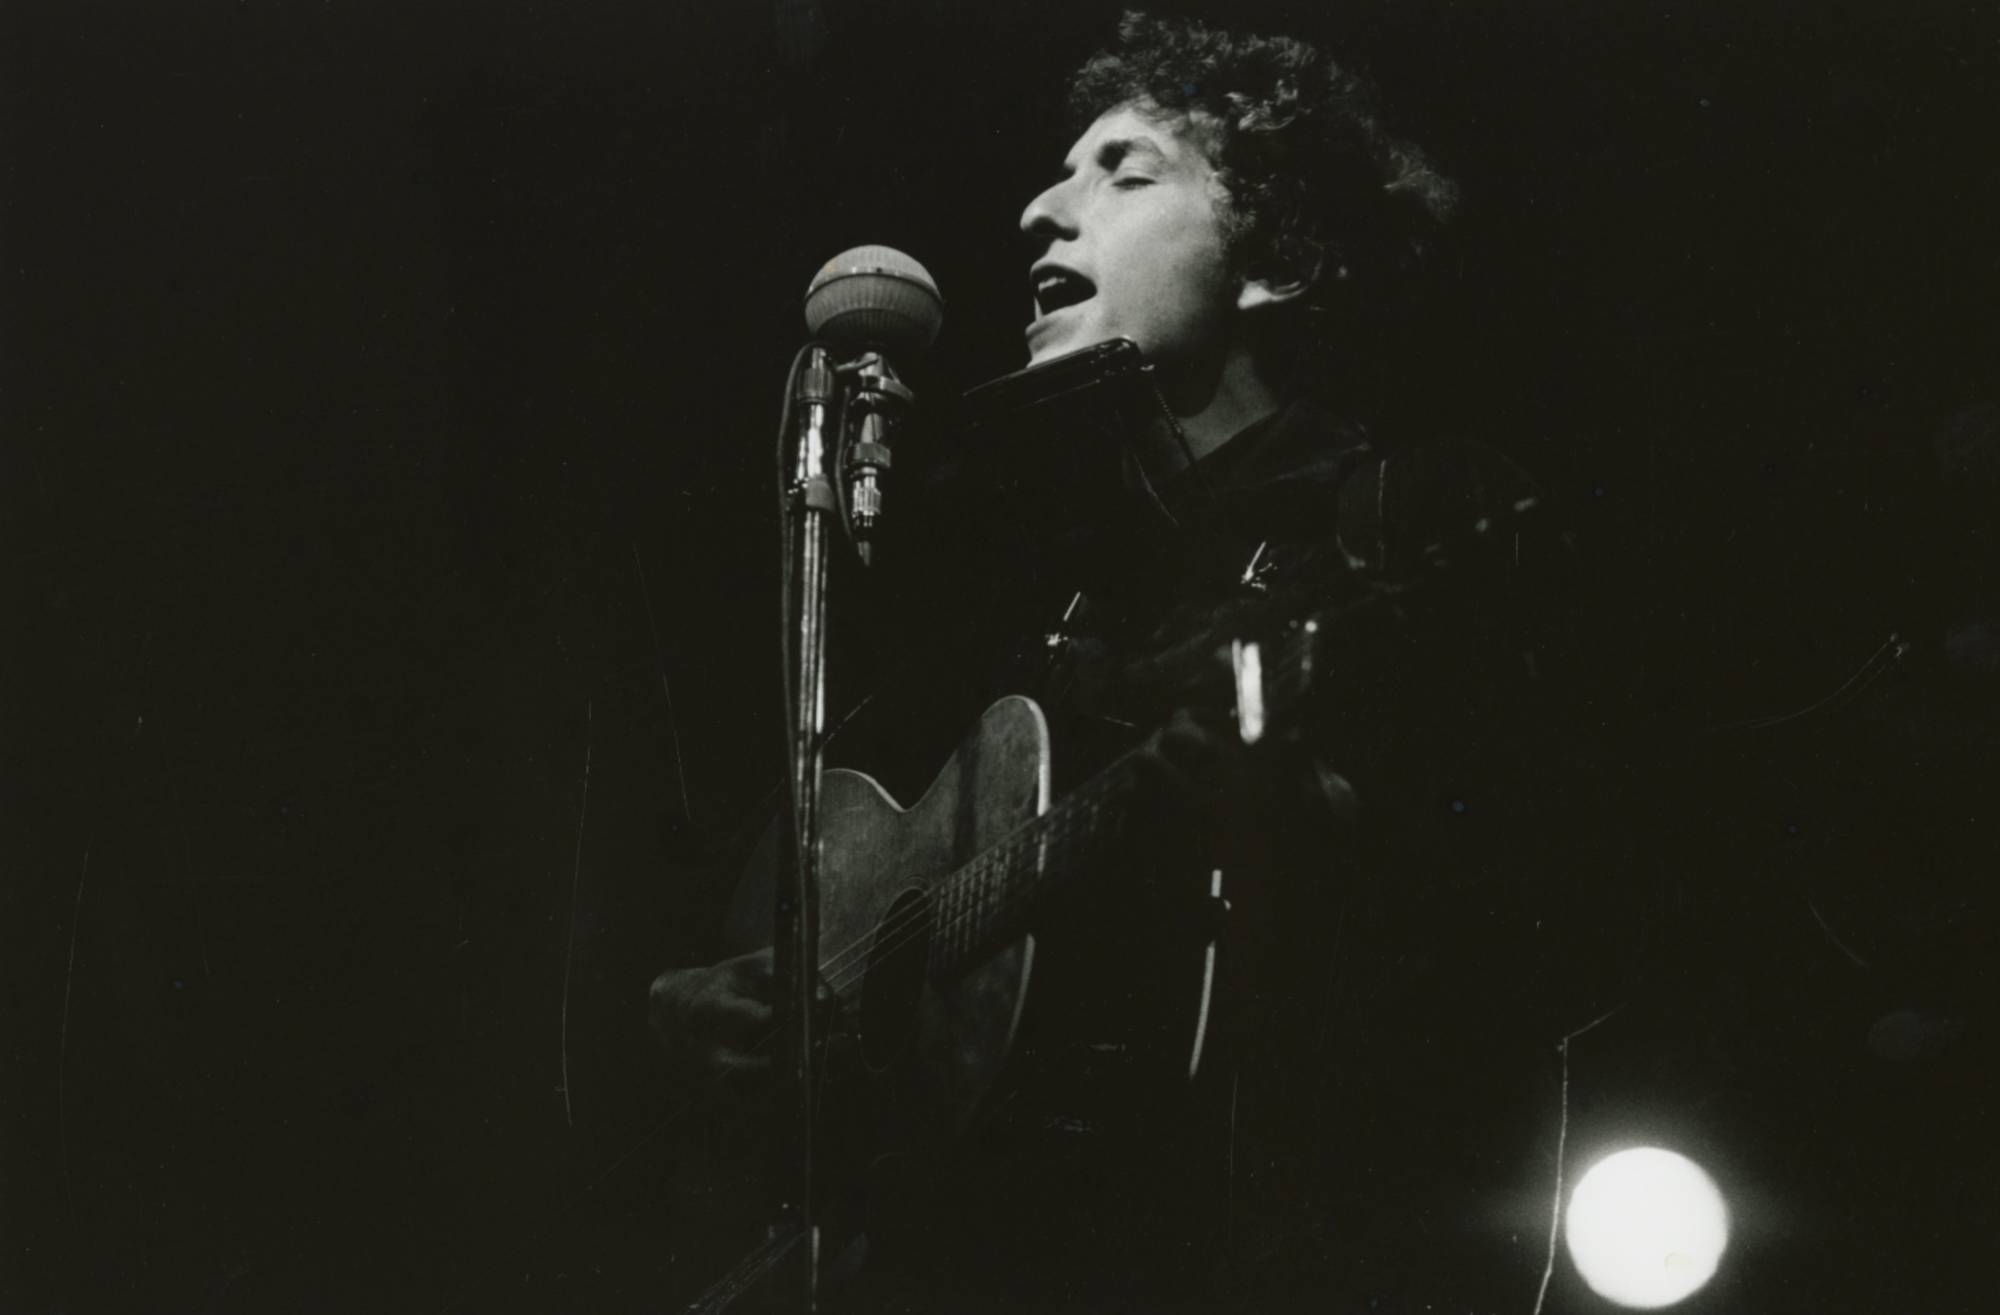 Bob Dylan performing at the Newport Folk Festival